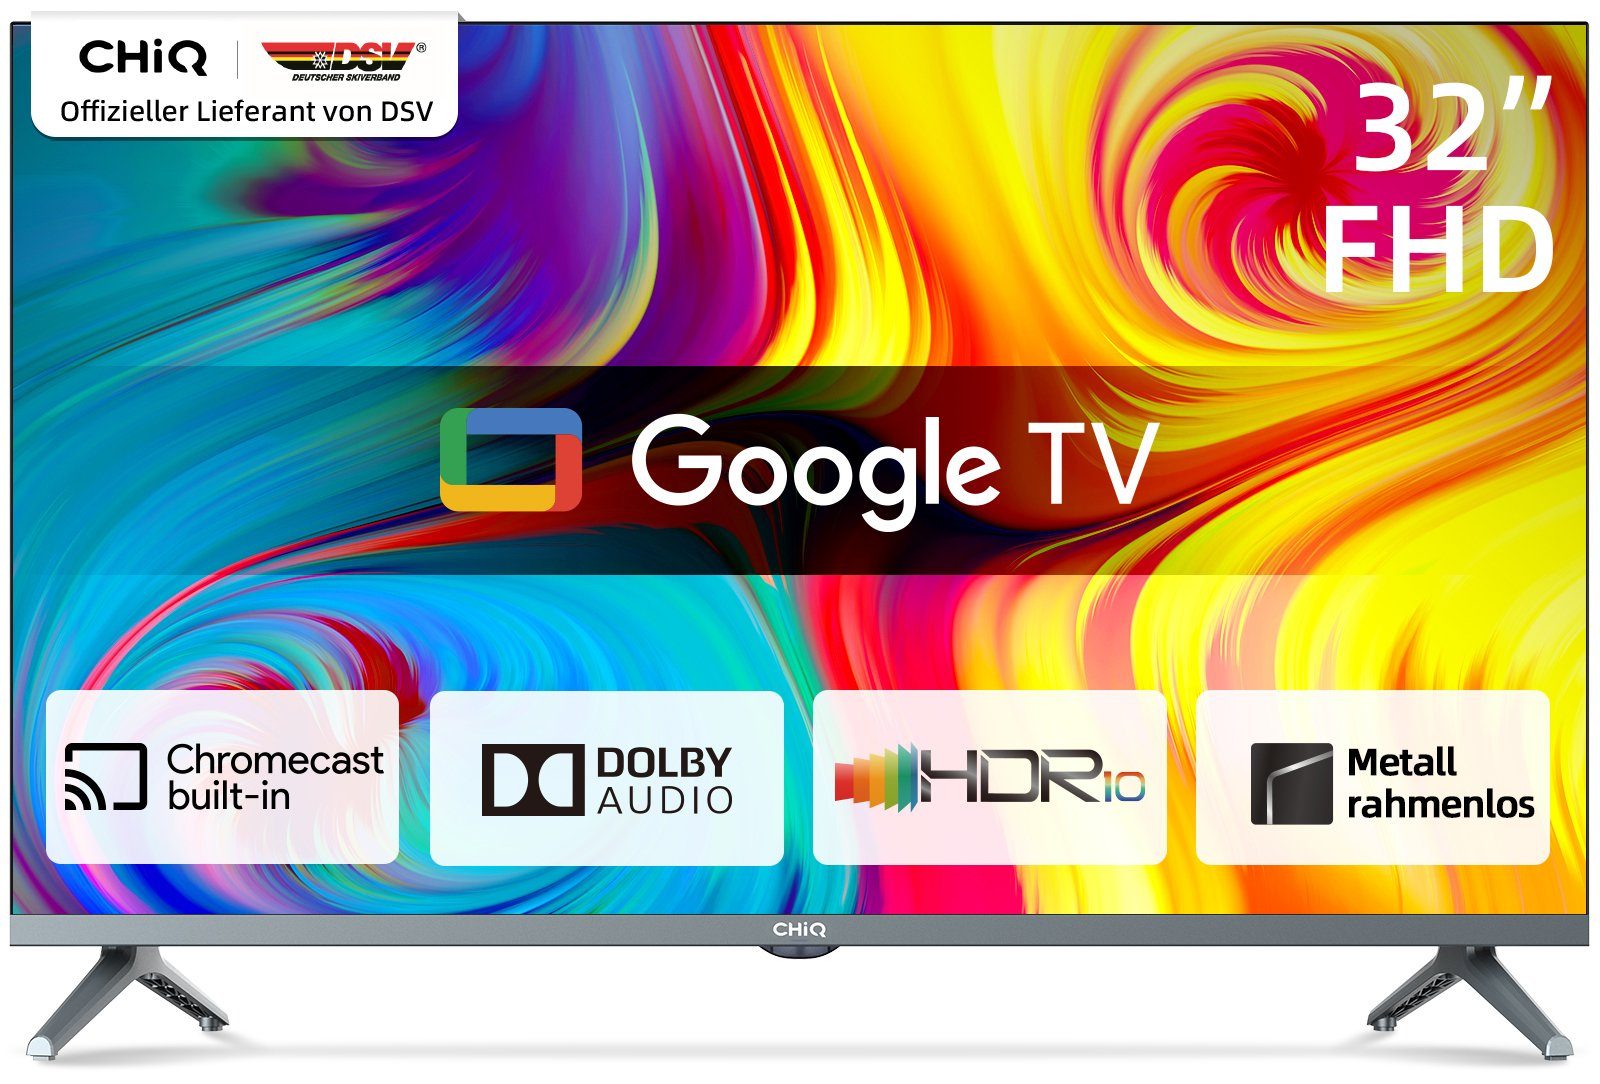 CHiQ L32H8CG LED-Fernseher (81,00 cm/32 Zoll, Full HD, Google TV, Smart-TV,  Metall rahmen,WiFi,Google Assistant,Triple Tuner(DVB-T2/T/C/S2)